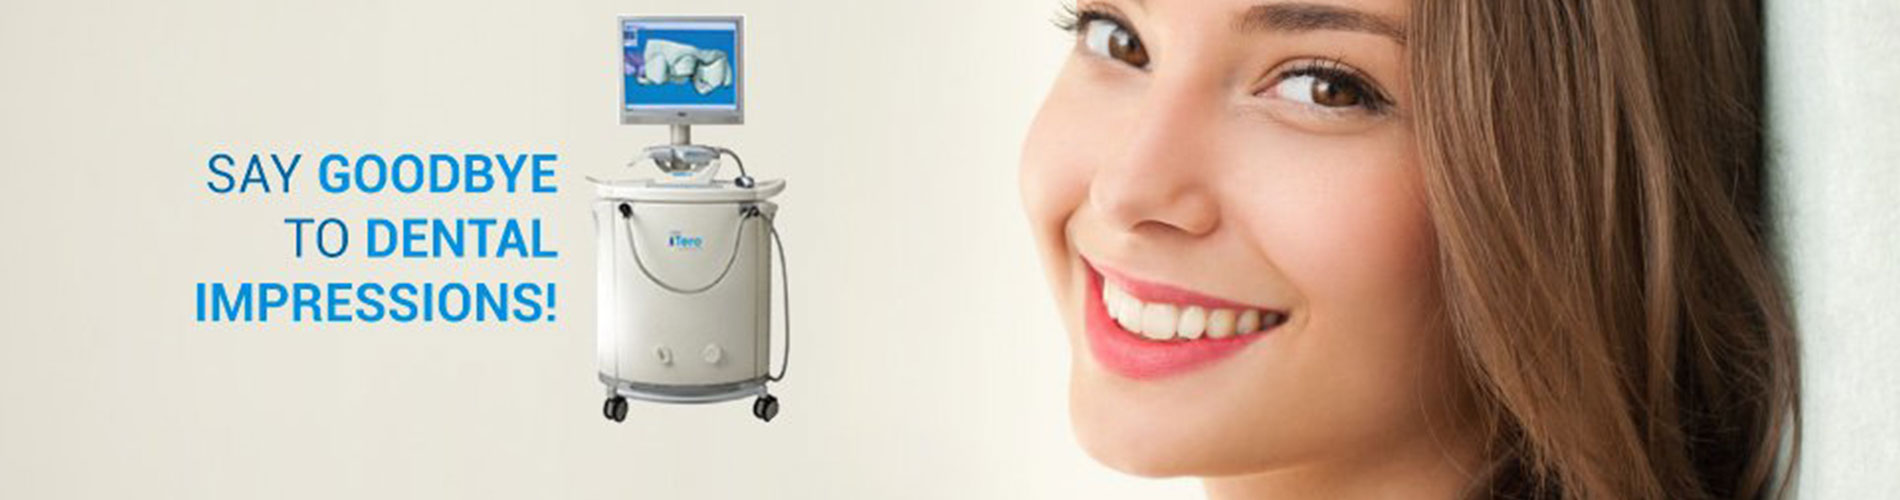 say goodbye to dental impressions | iTero | smiling woman